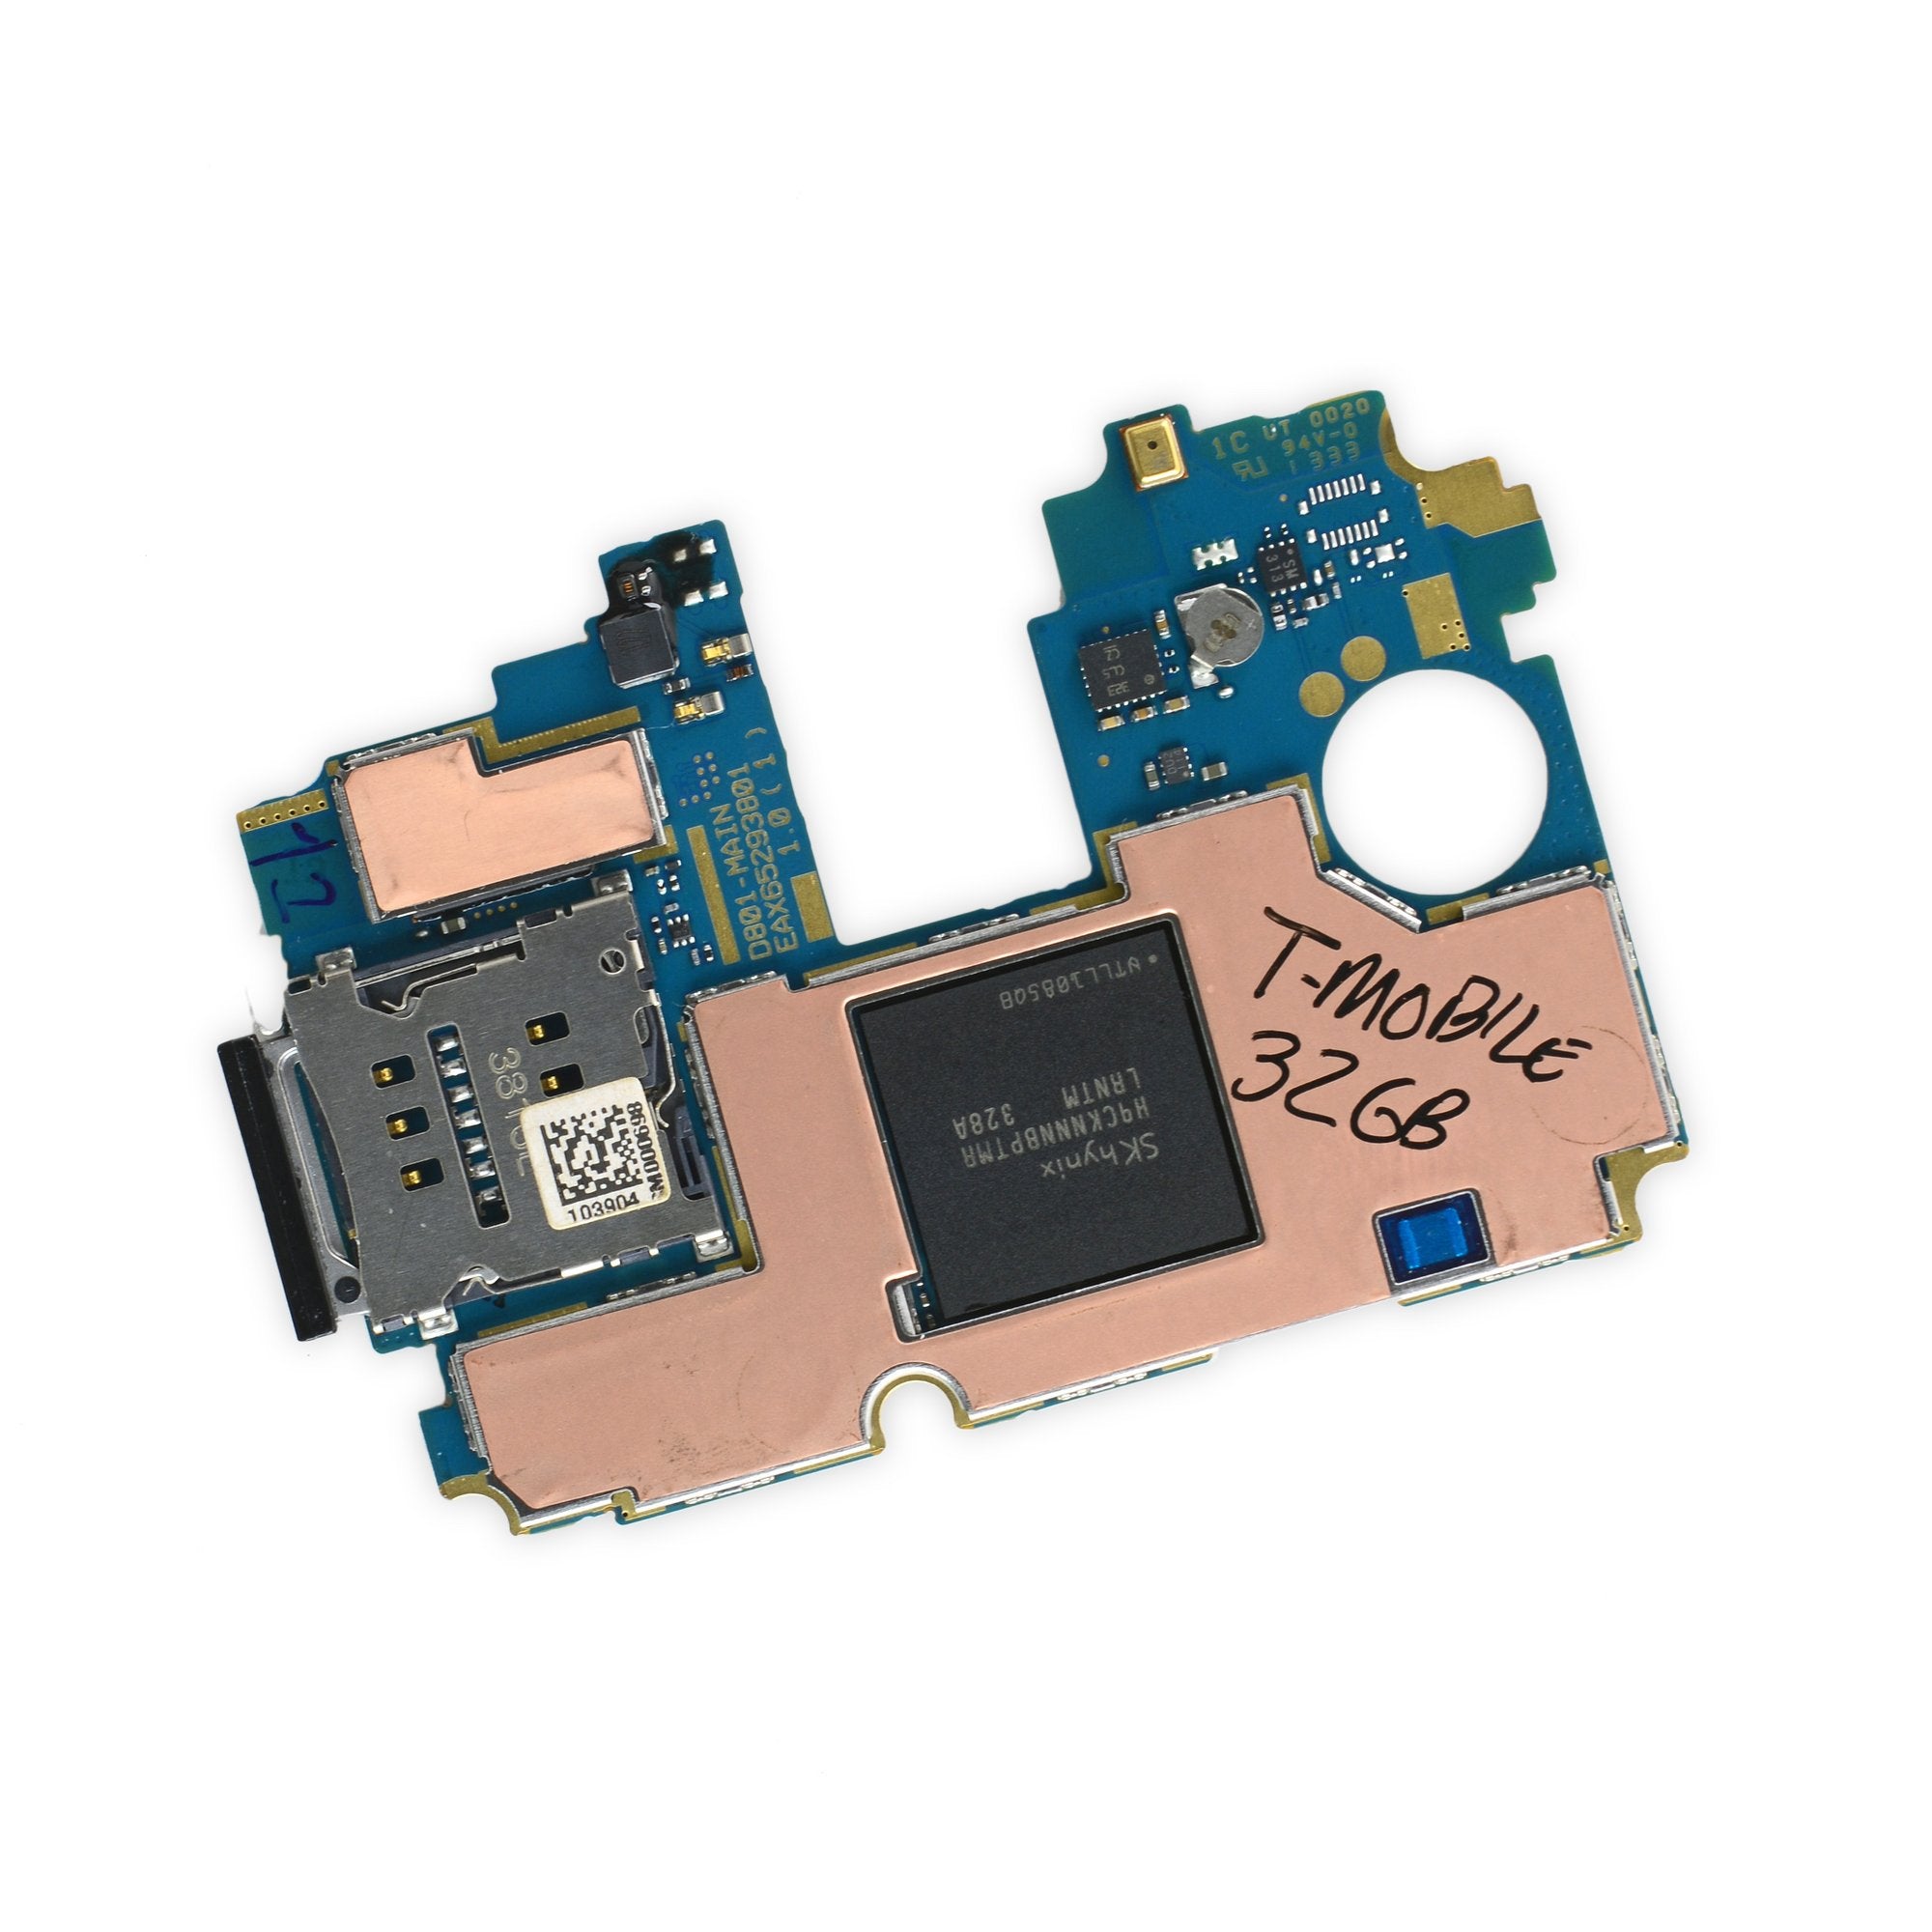 LG G2 Motherboard (T-Mobile)